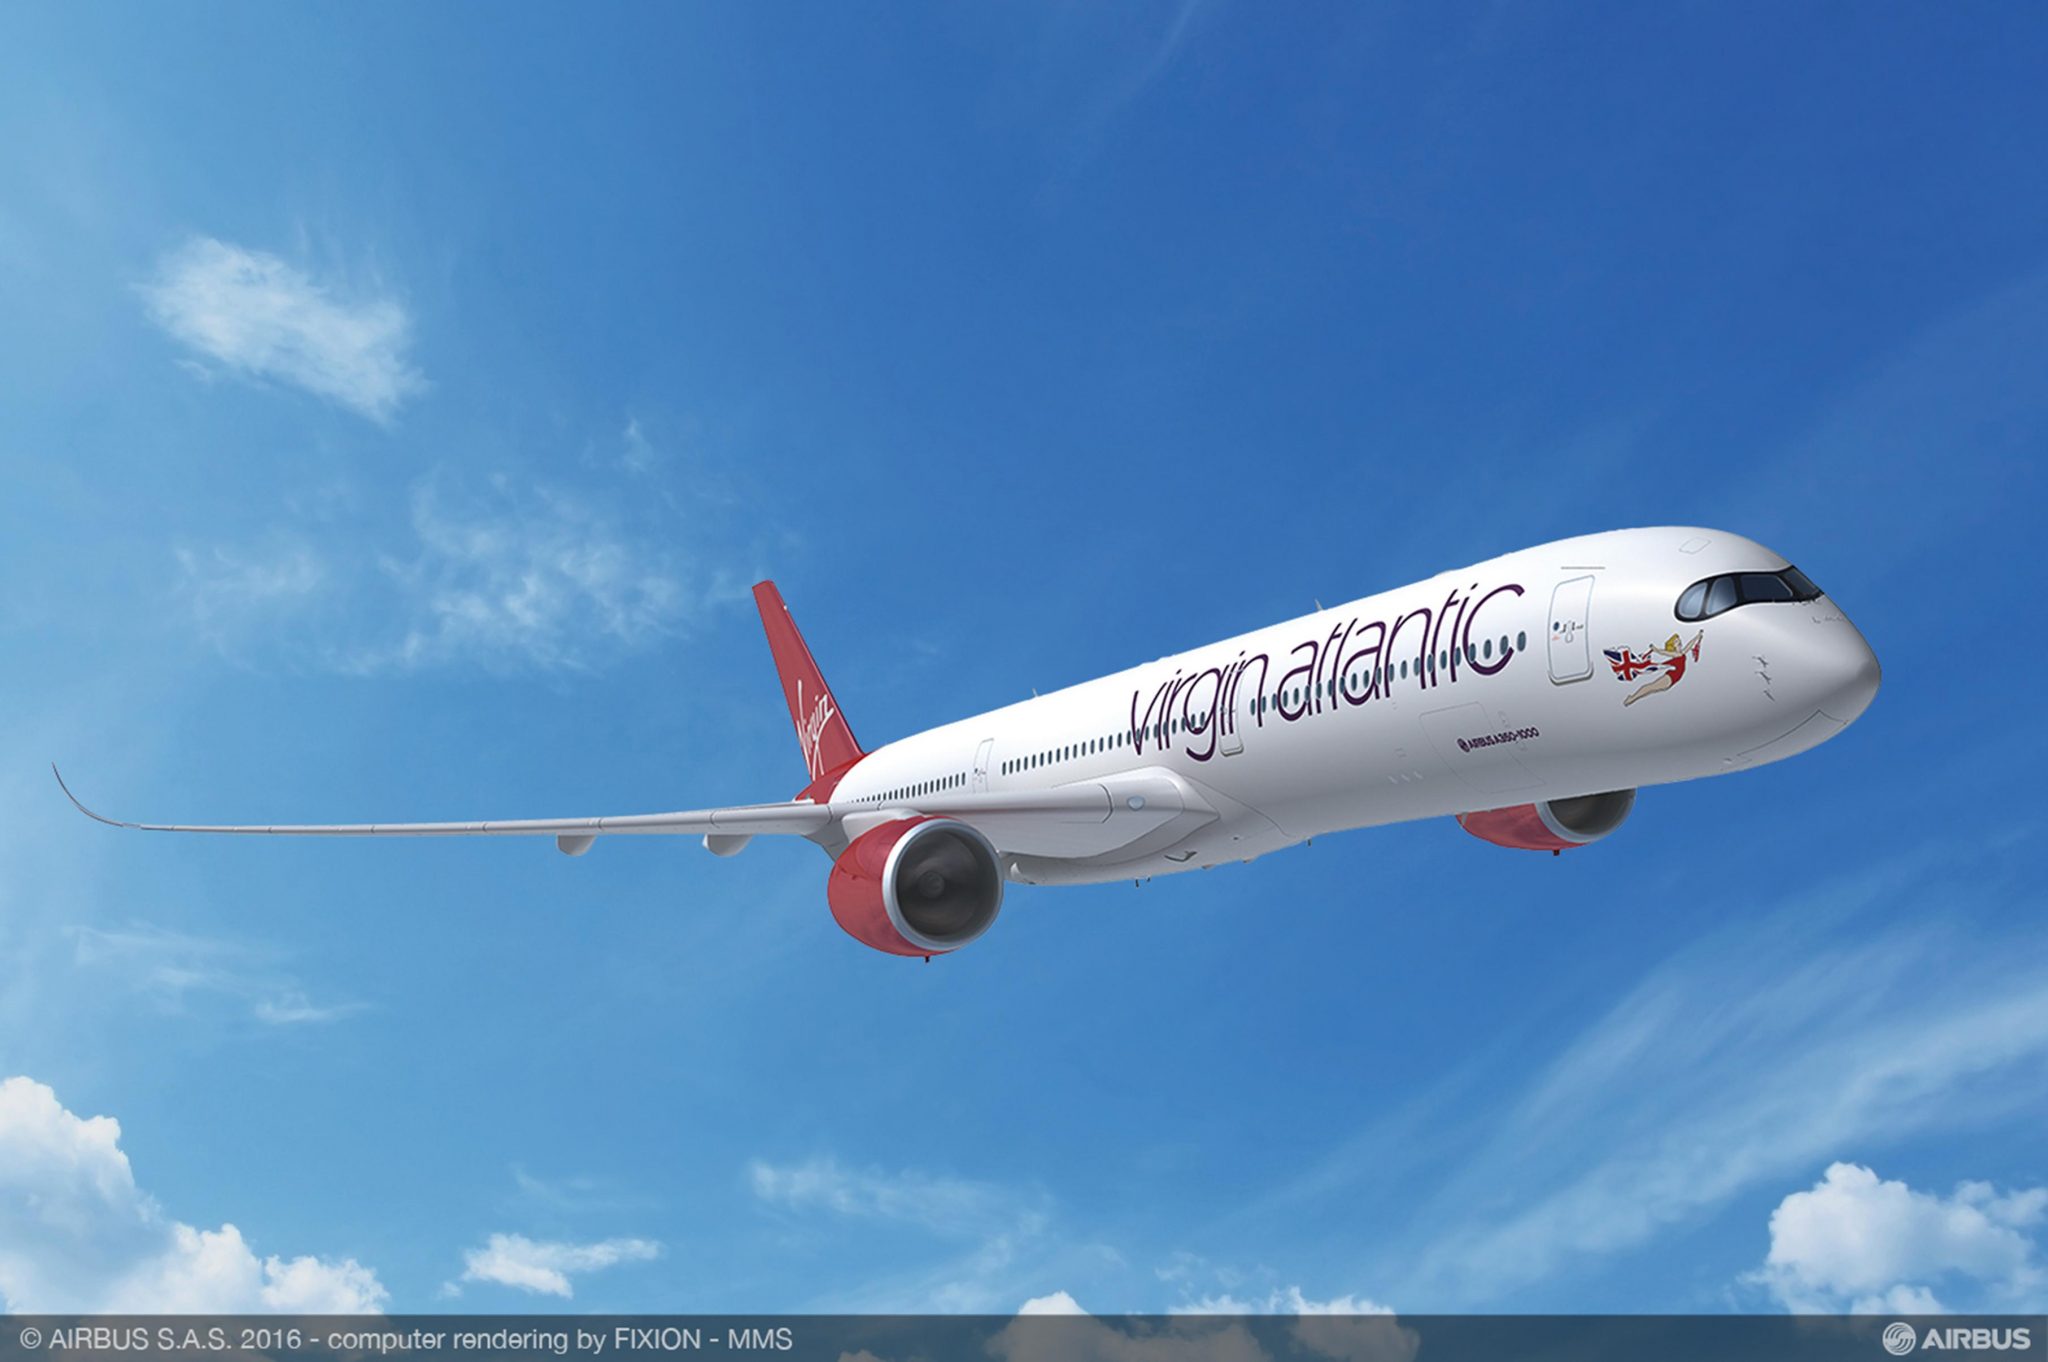 Virgin Atlantic becomes latest airline to join Bluebiz programme